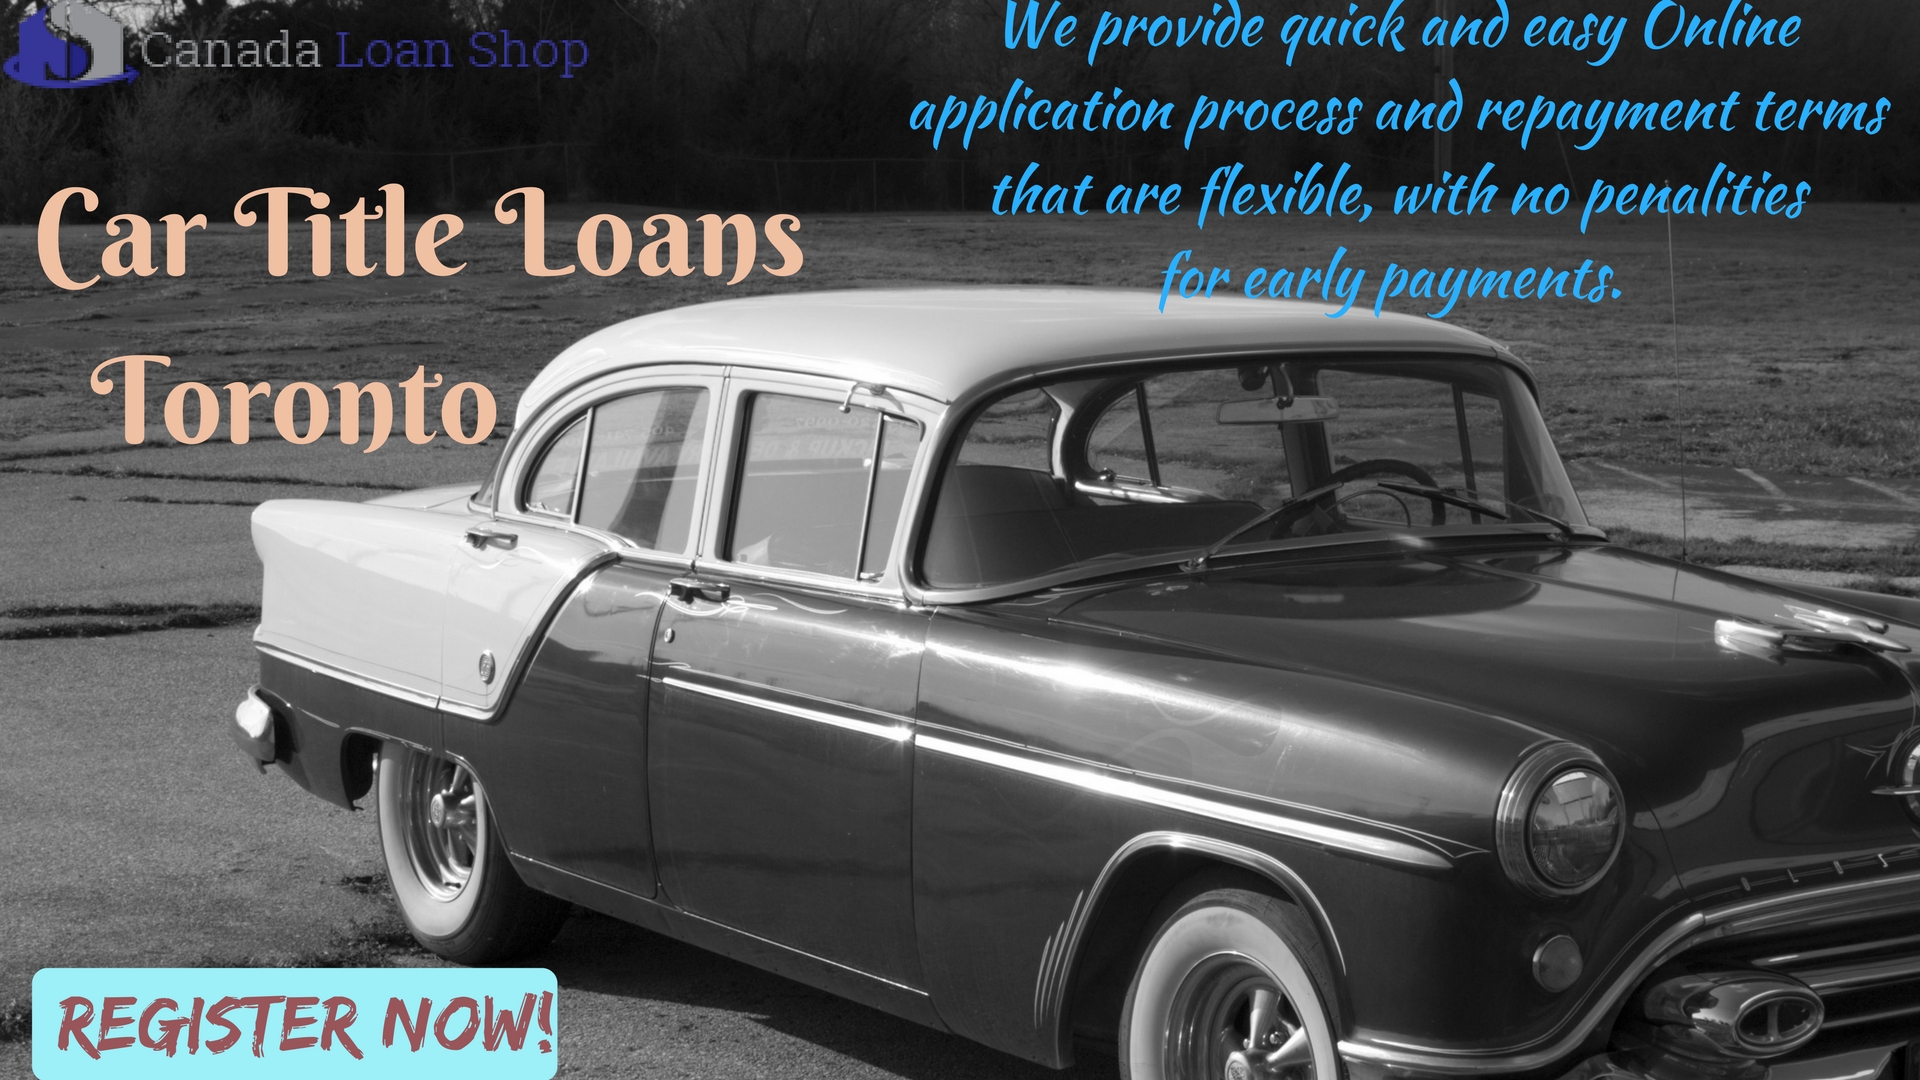 Car Title Loans Toronto